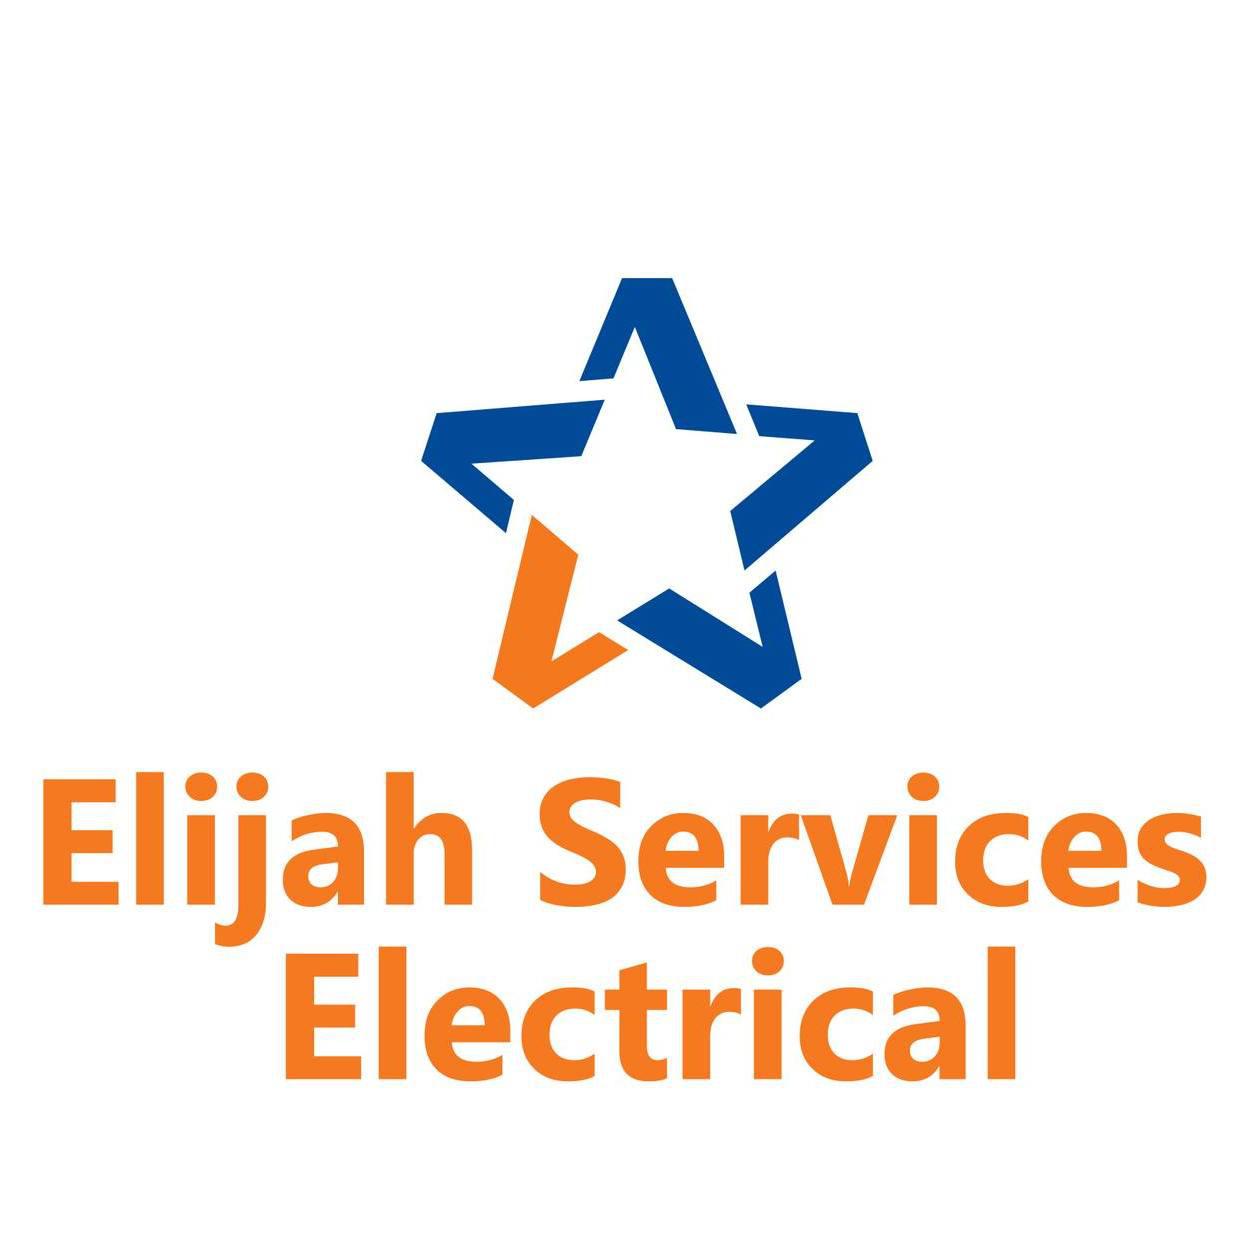 Elijah Services Electrical - Conroe, TX - (936)537-1660 | ShowMeLocal.com